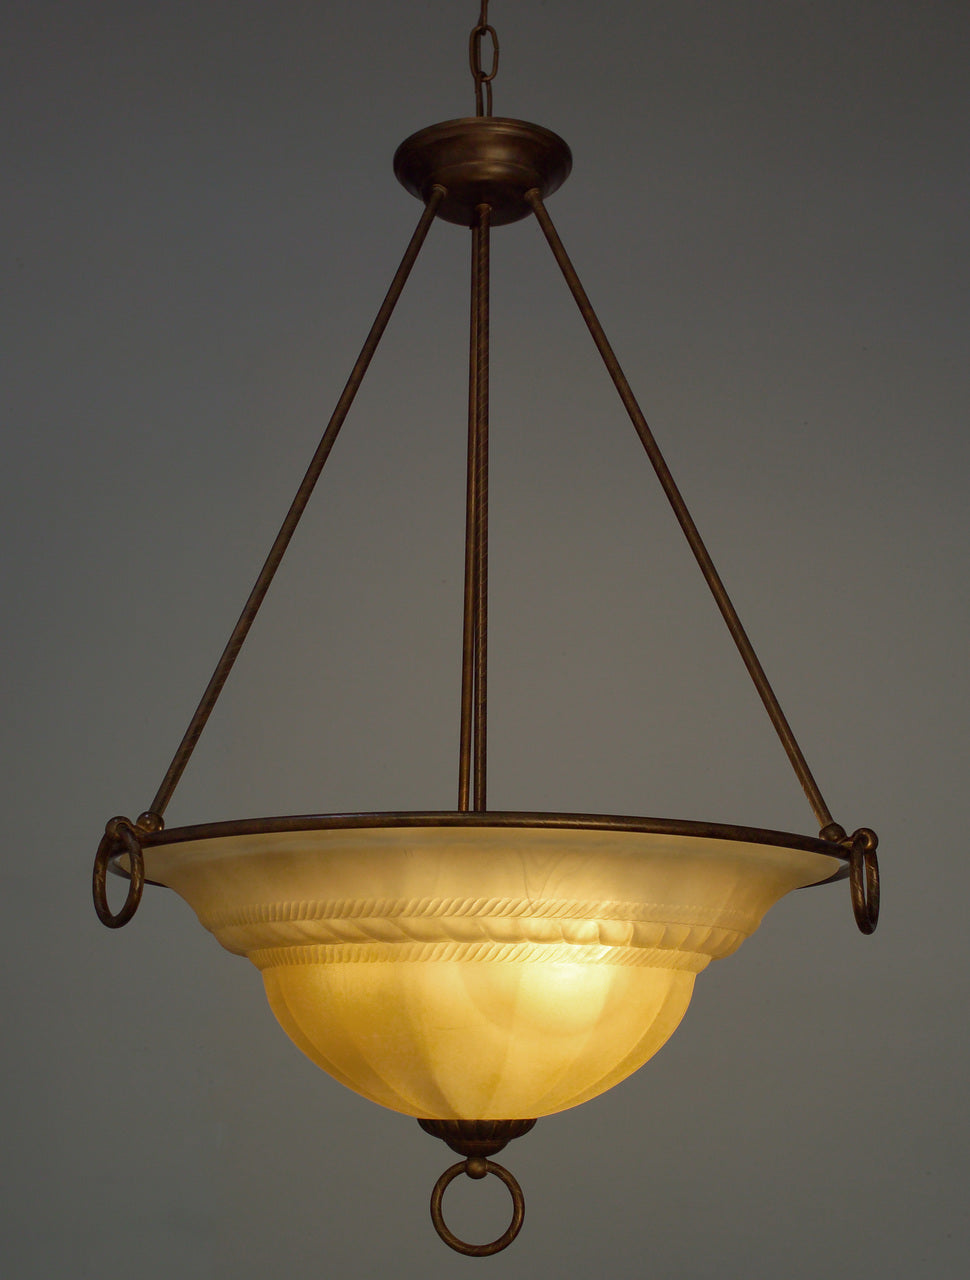 Classic Lighting 40105 EB CRM Livorno Traditional Pendant in English Bronze